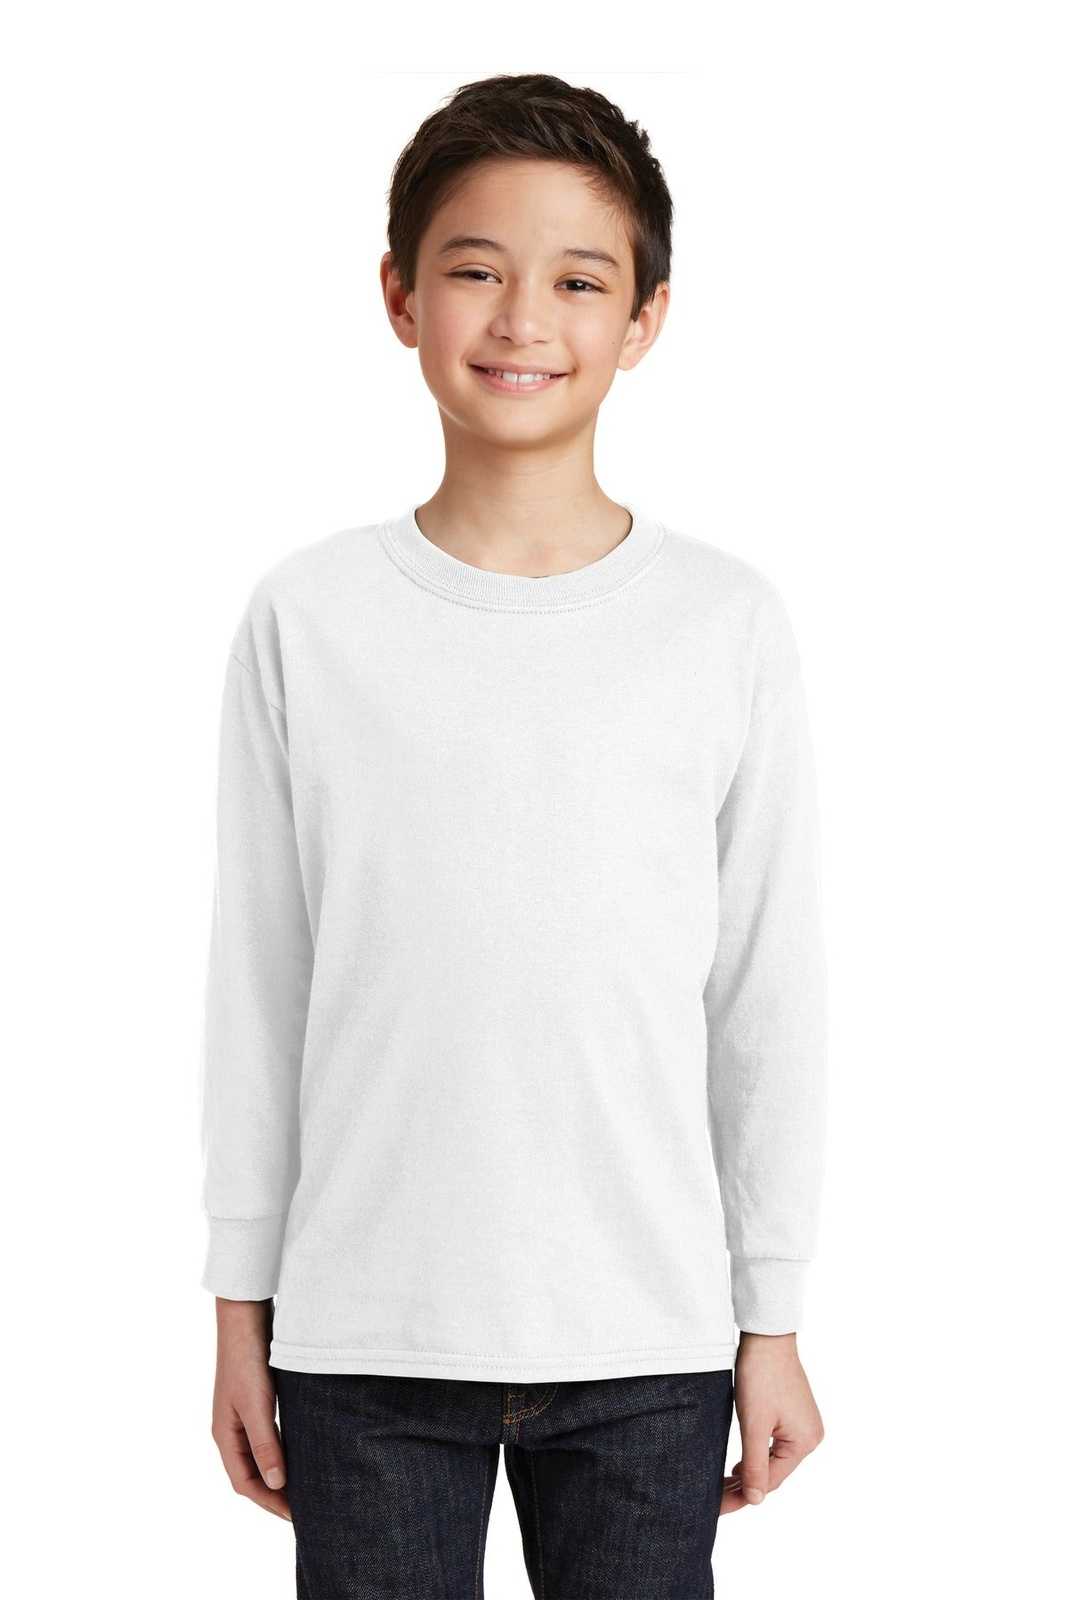 Gildan 5400B Youth Heavy Cotton 100% Cotton Long Sleeve T-Shirt - White - HIT a Double